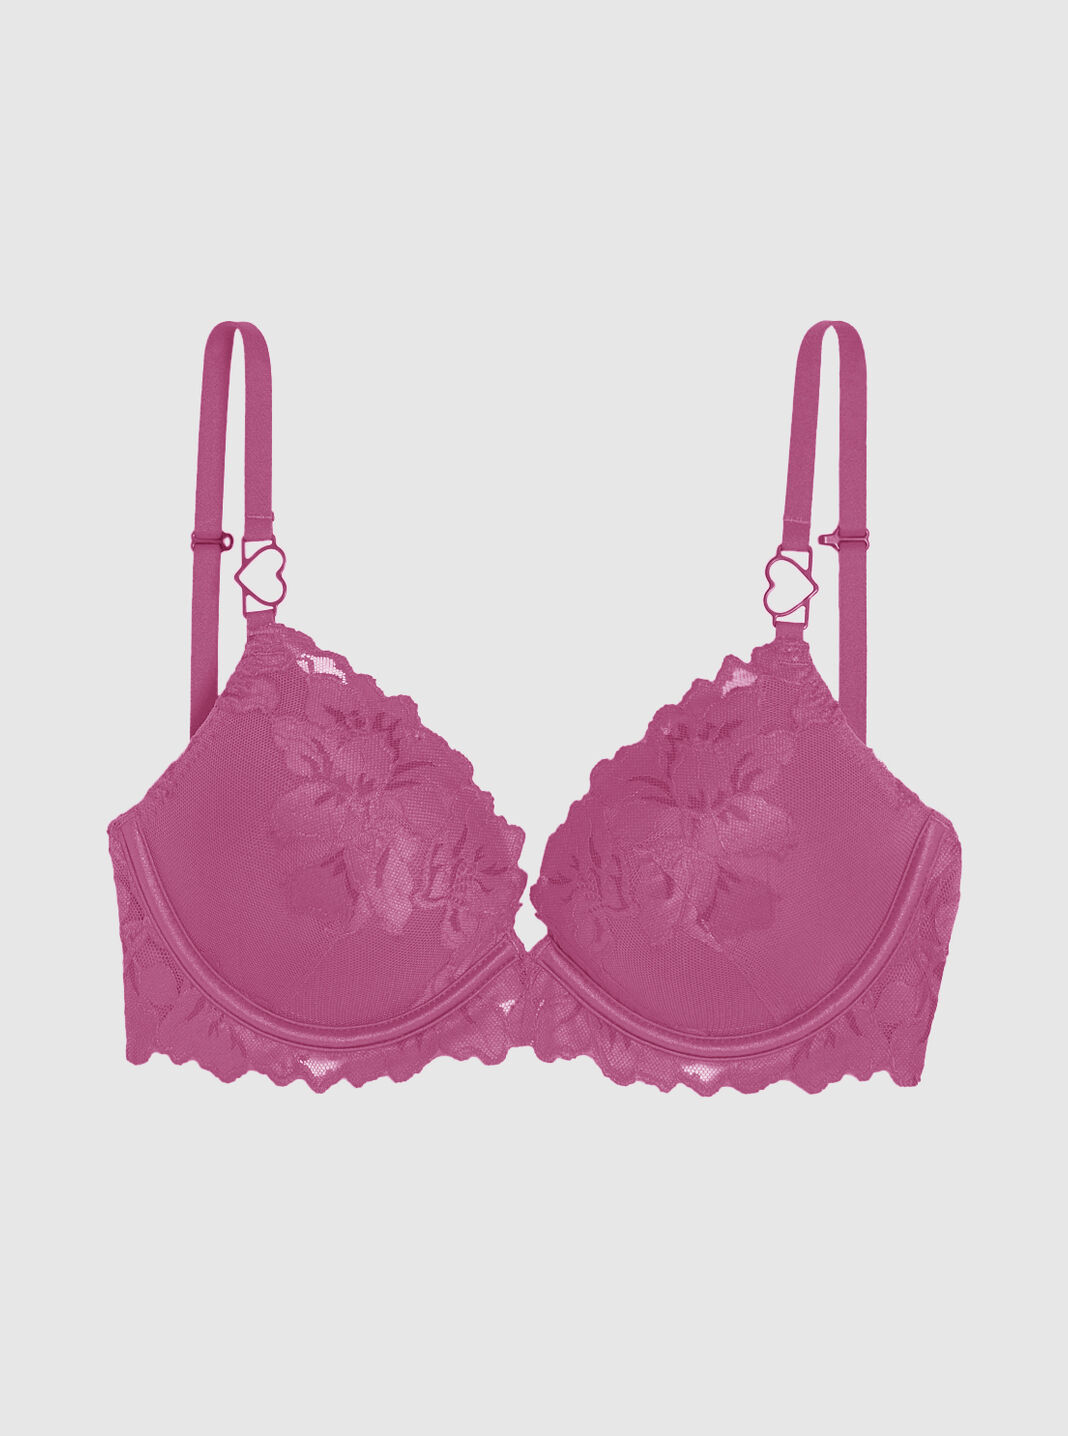 La Senza Push Up Bra Pink Size 34 B - $14 (71% Off Retail) - From Lea